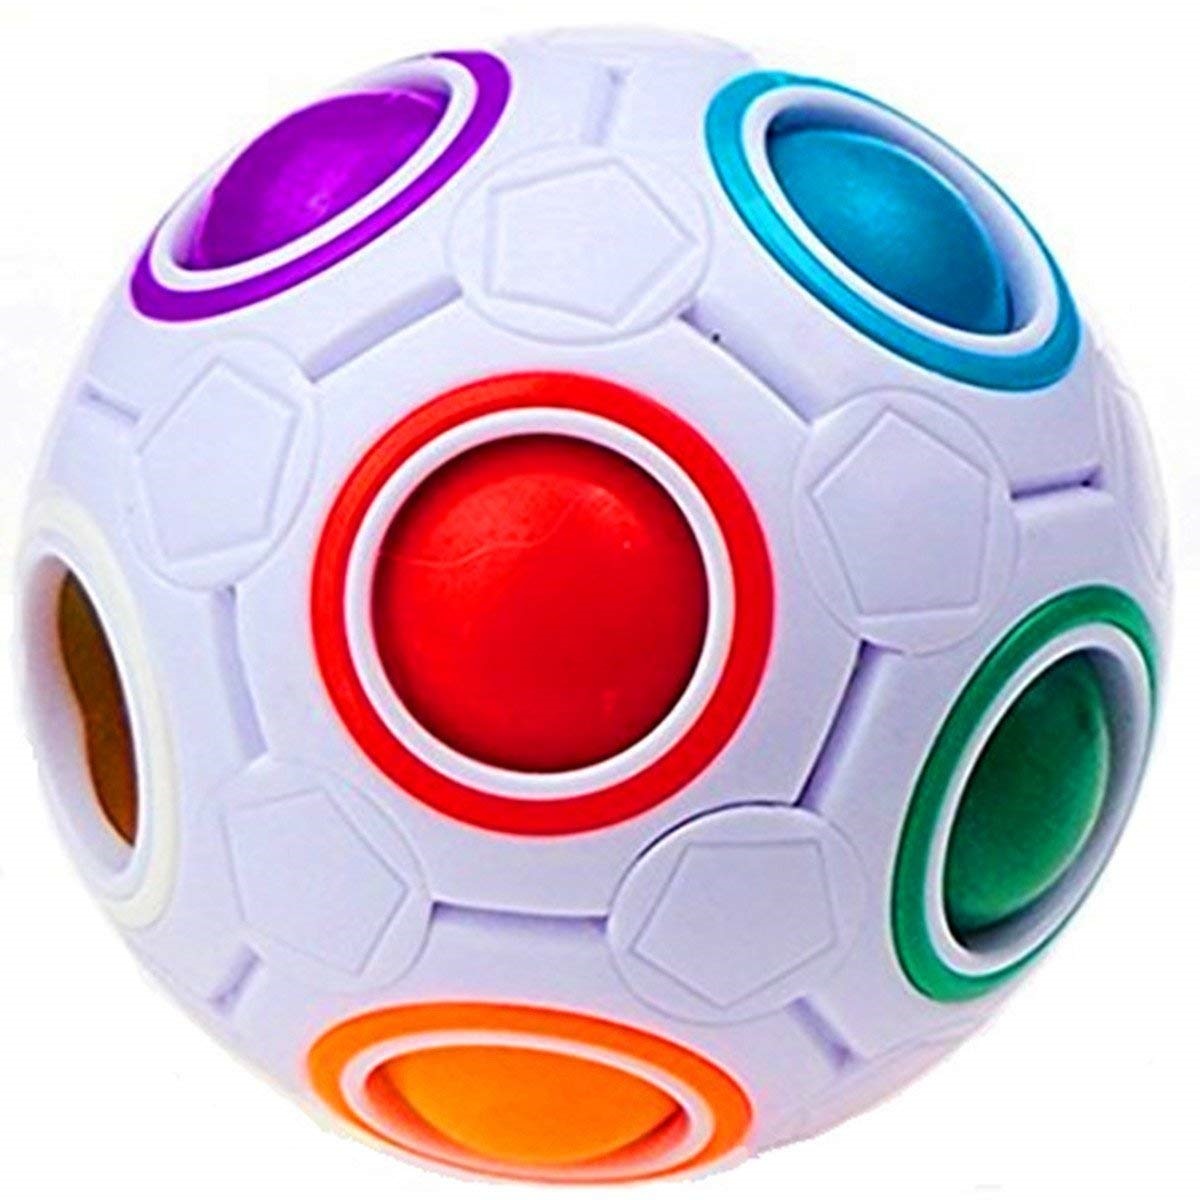 cuberspeed rainbow ball